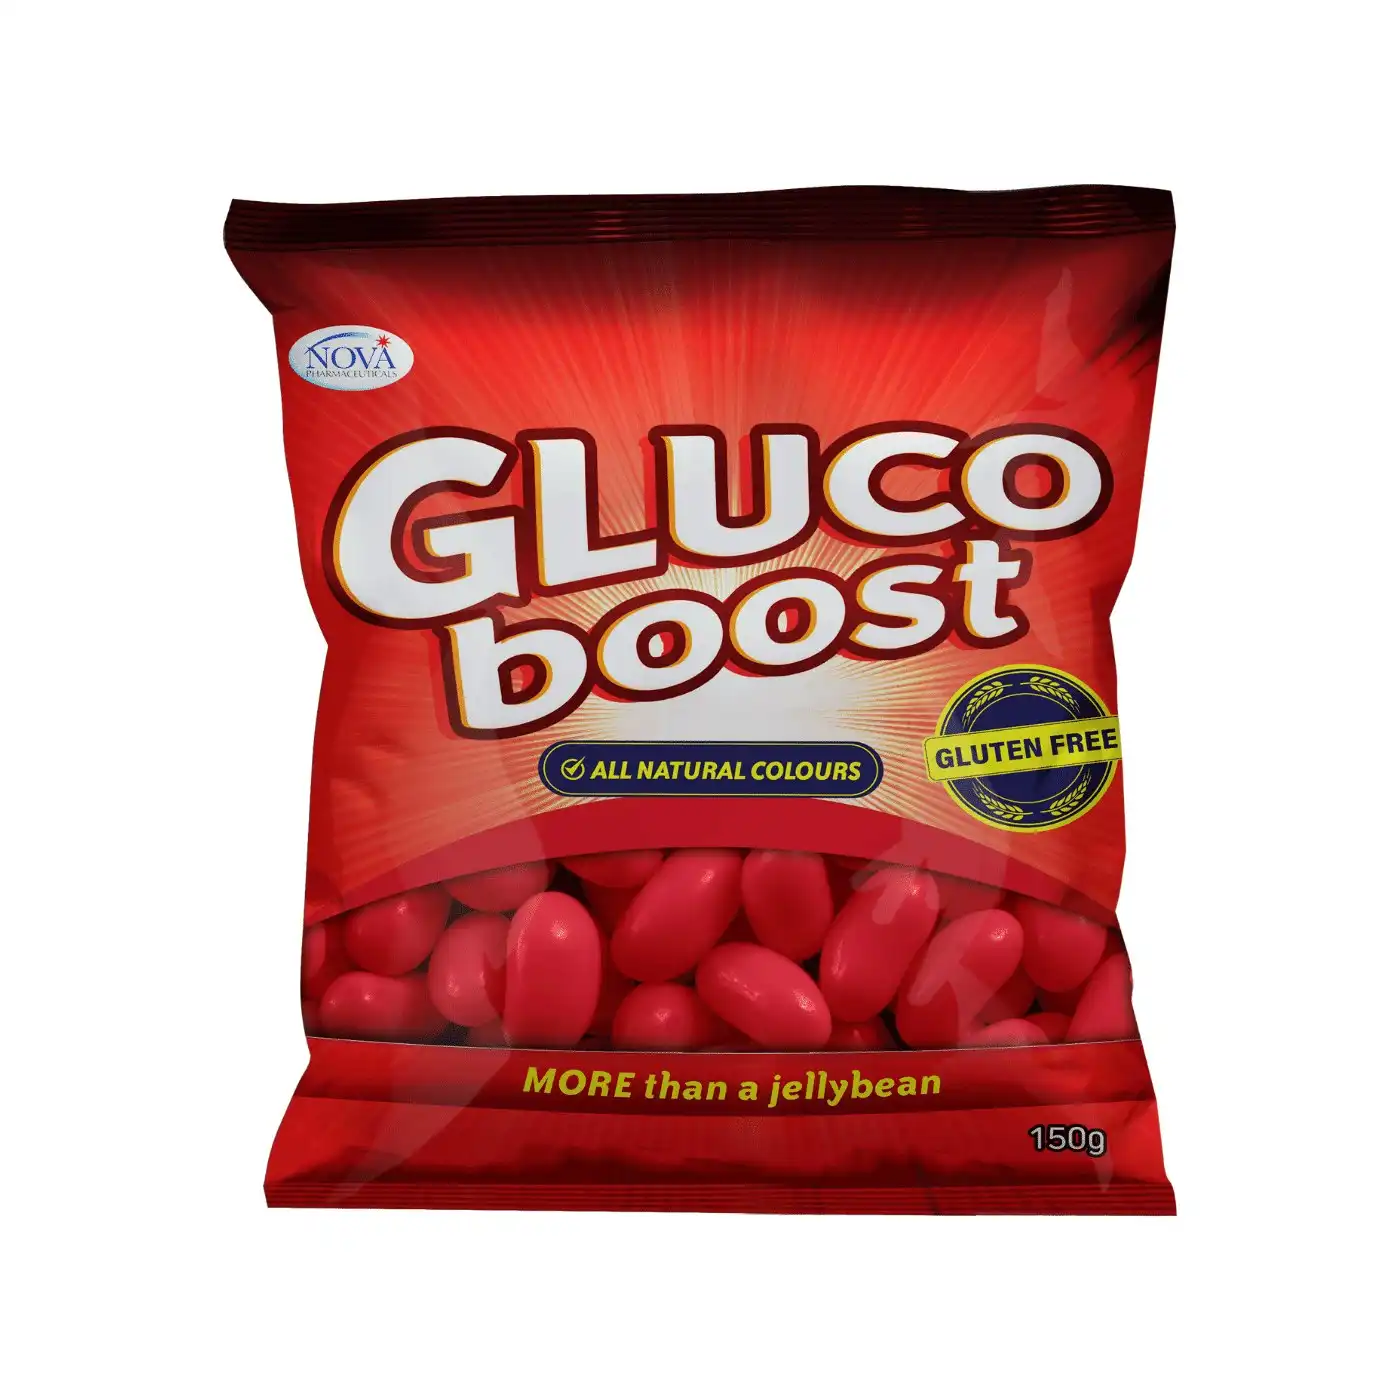 GlucoBoost Red 150g